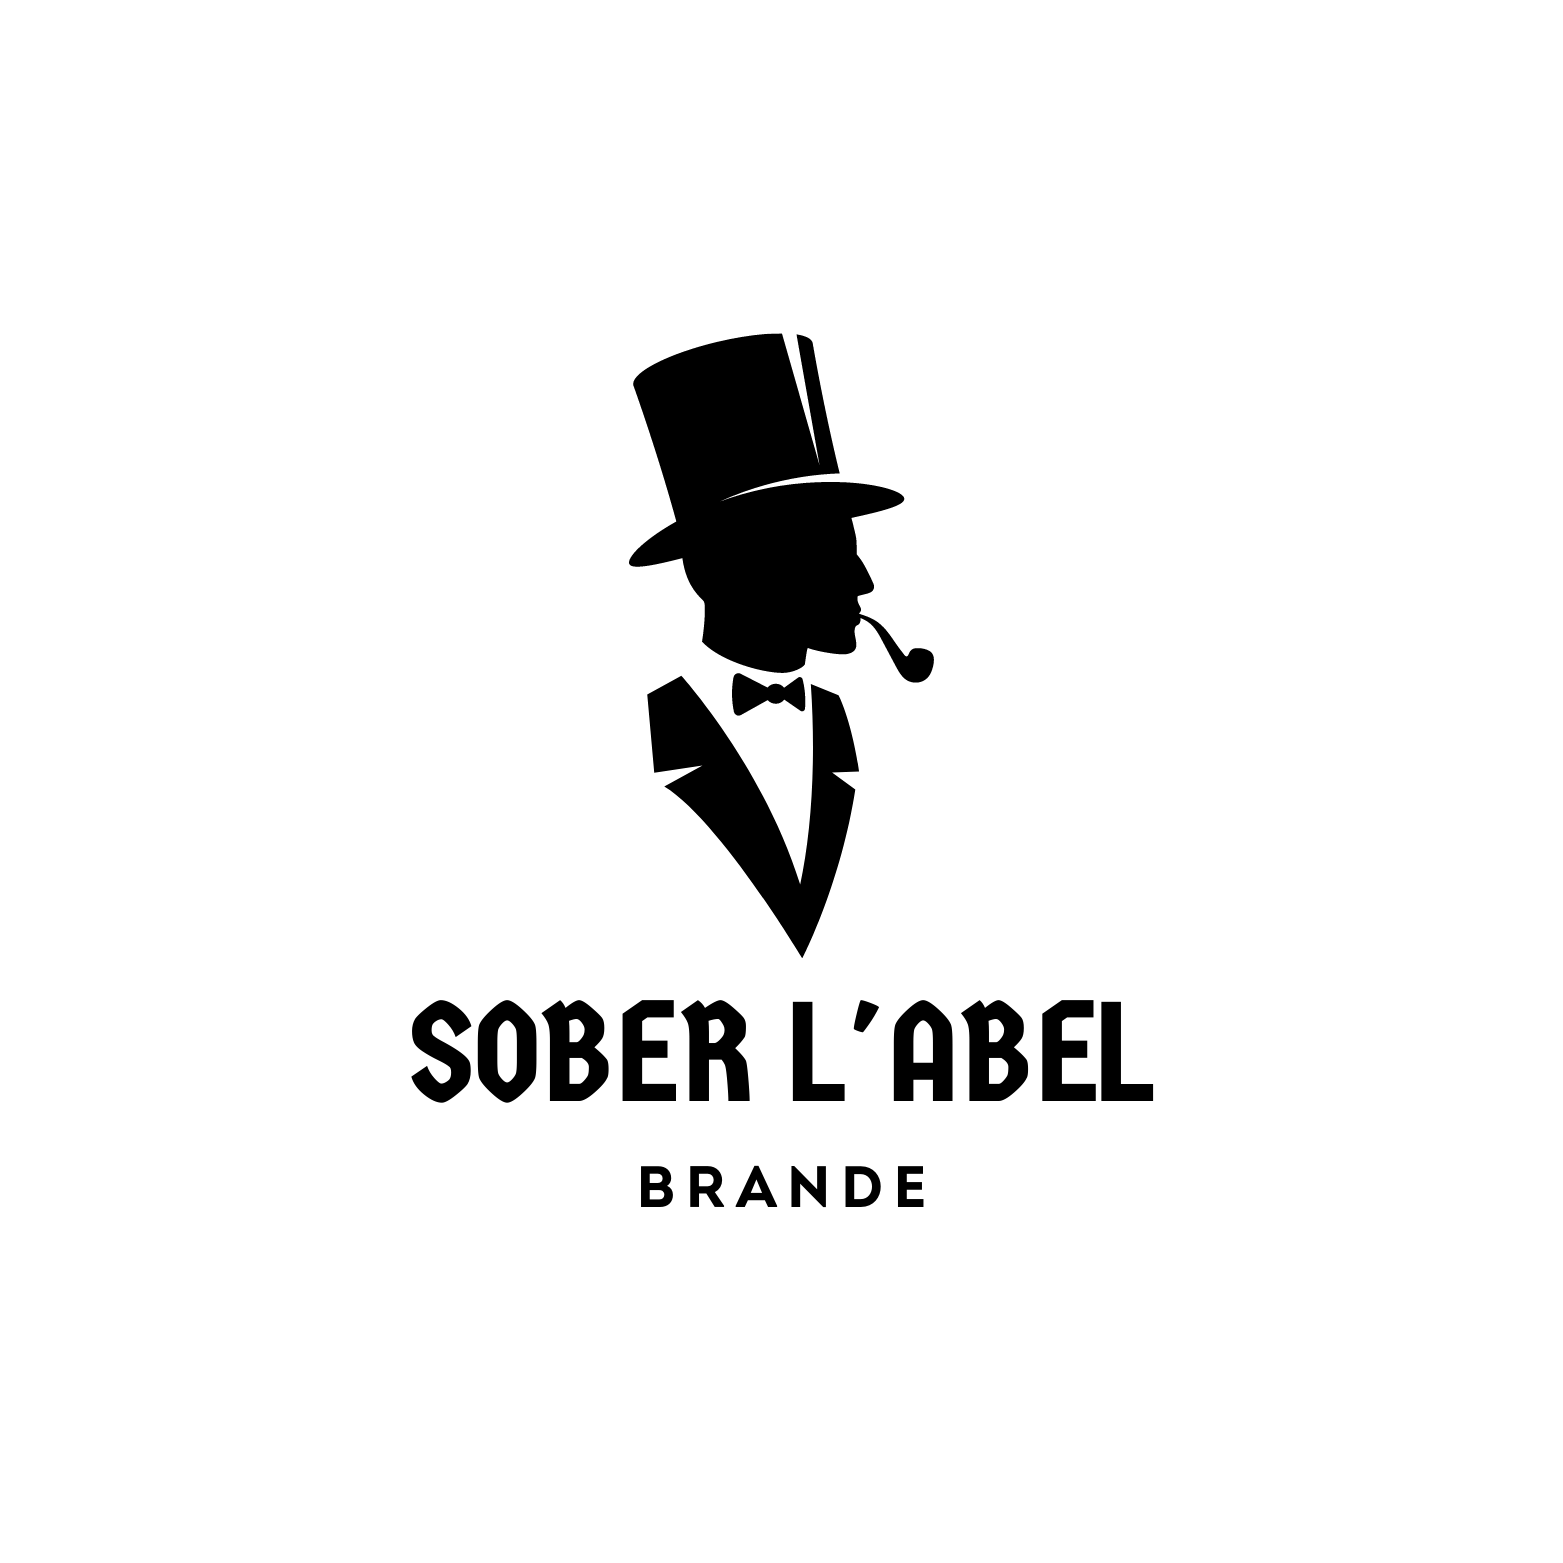 Sober-label